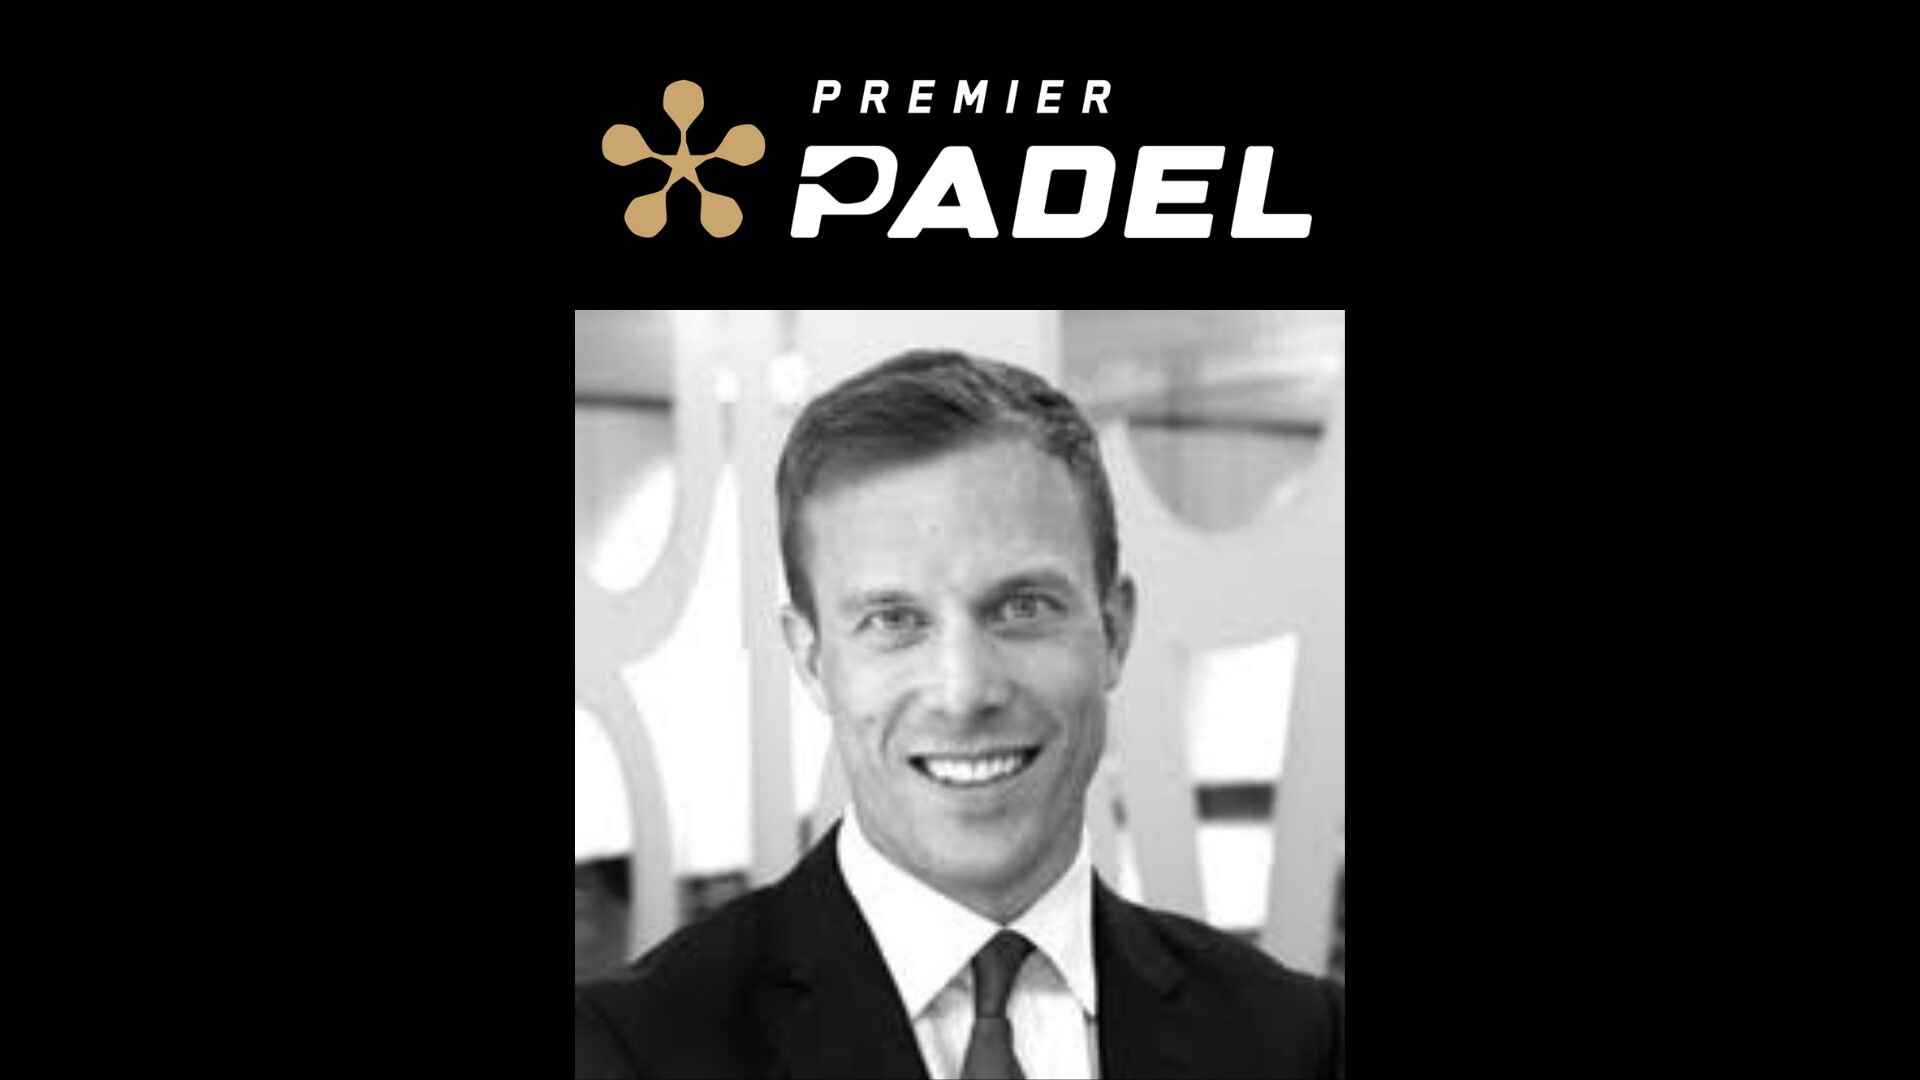 David Sugden, nowy dyrektor generalny Premier Padel !